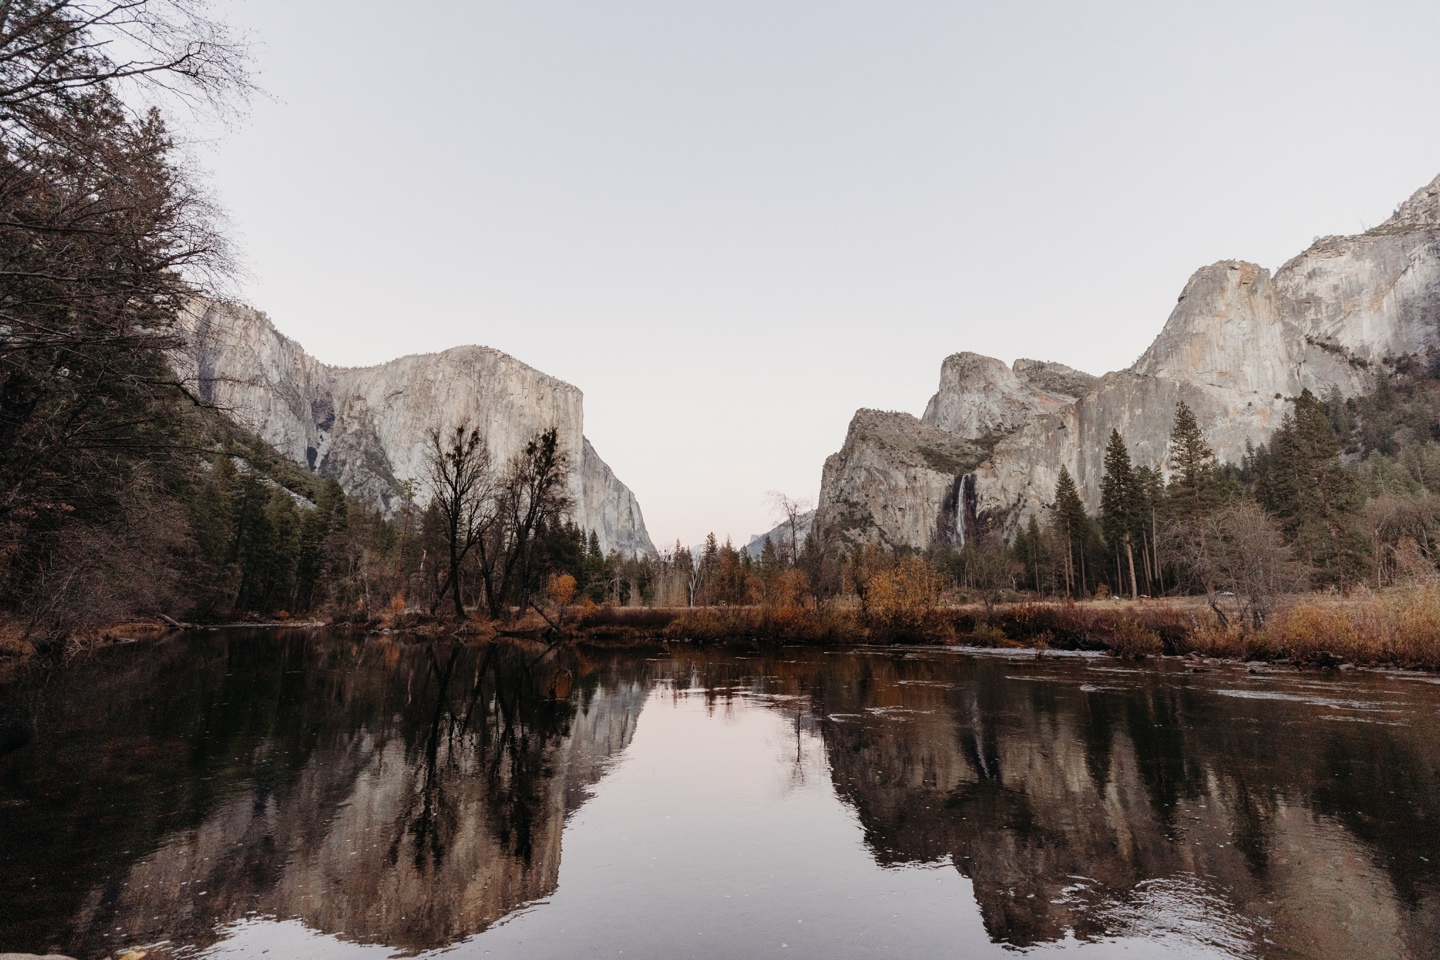 Yosemite's granite mountains reflected in a still lake in Yosemite National Park.